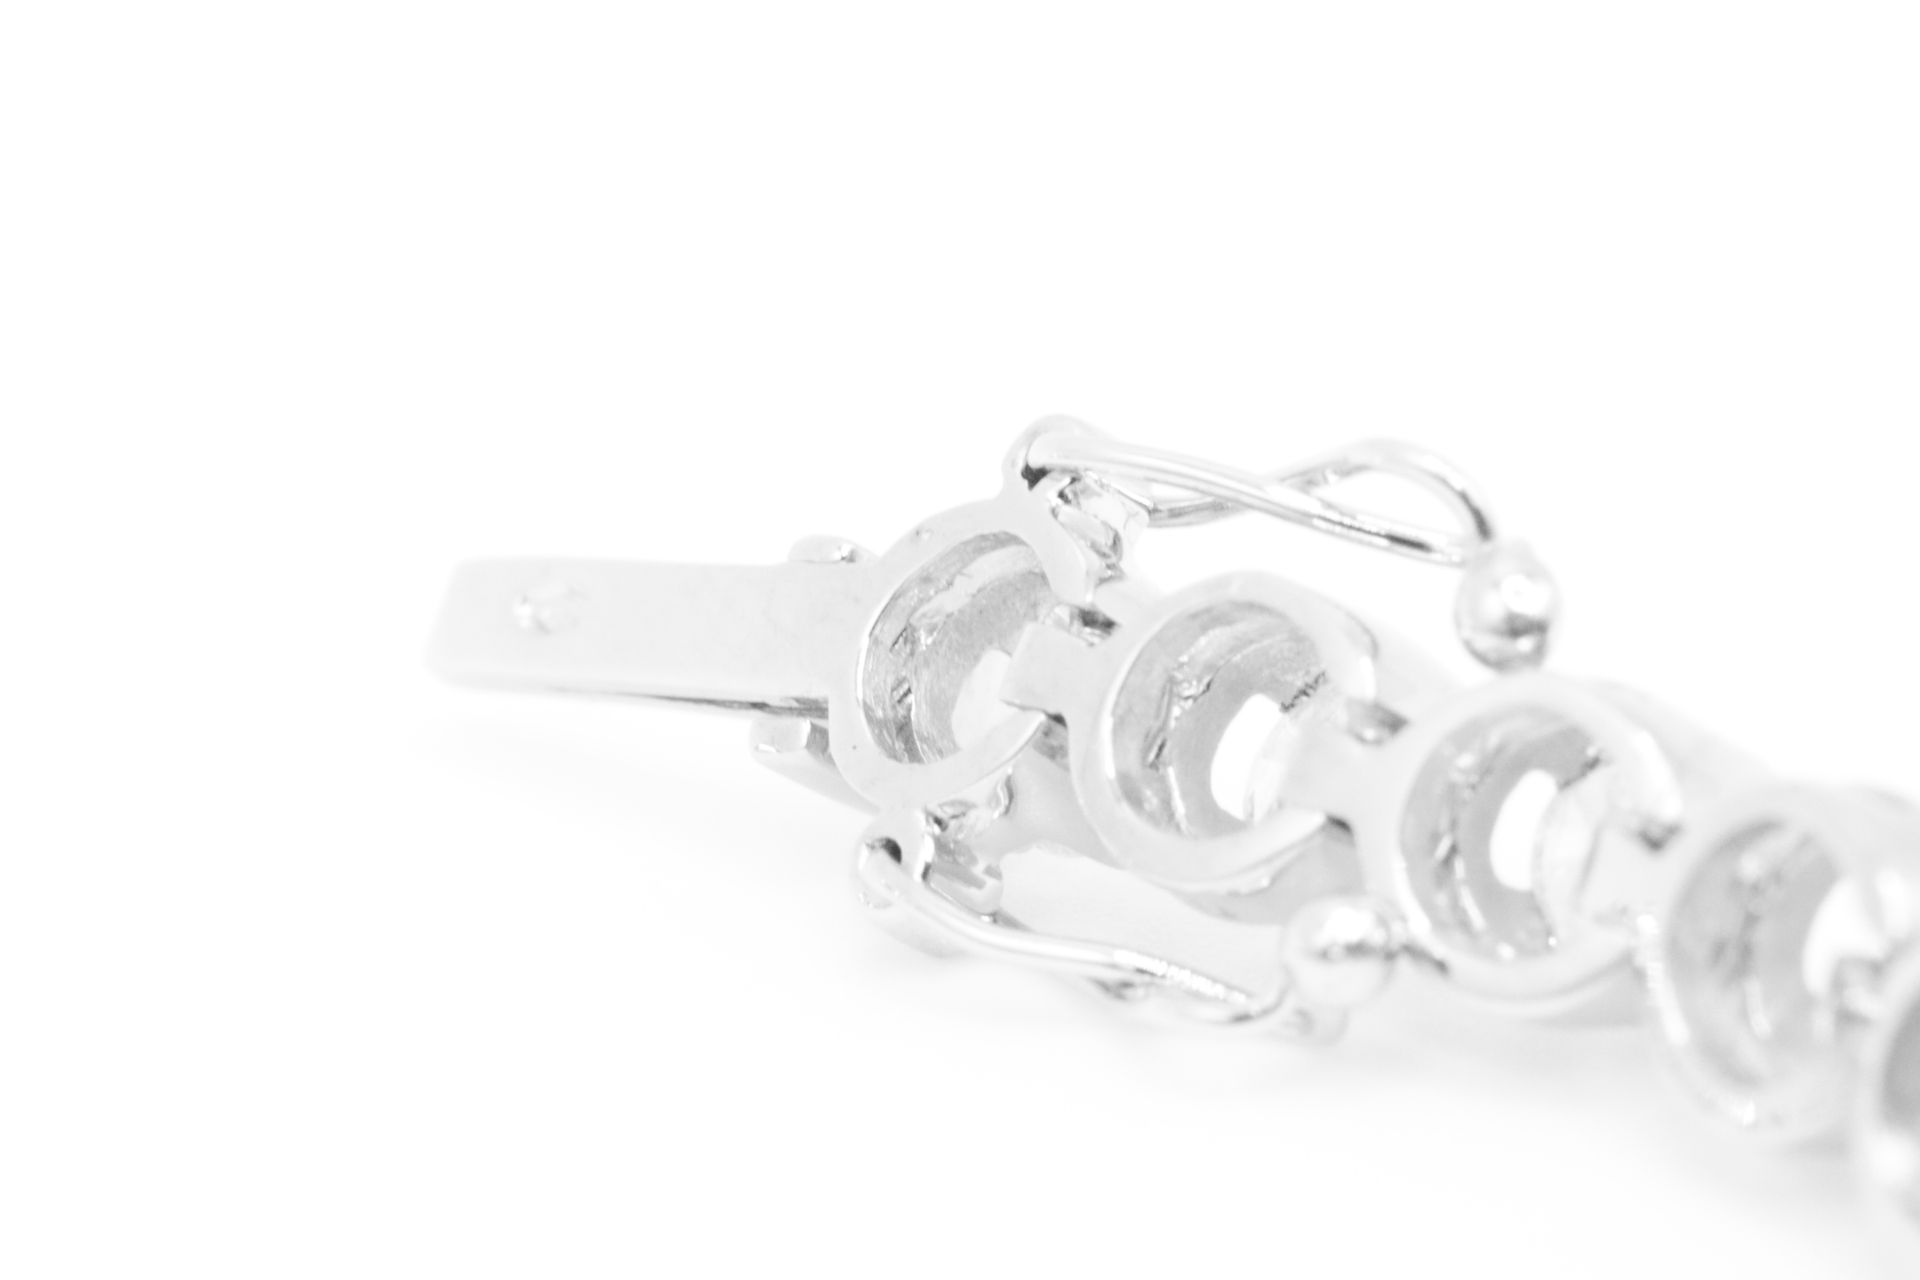 7.0 Carat 18ct White Gold Tennis Bracelet set with Round Brilliant Cut Natural Diamonds - Image 12 of 16